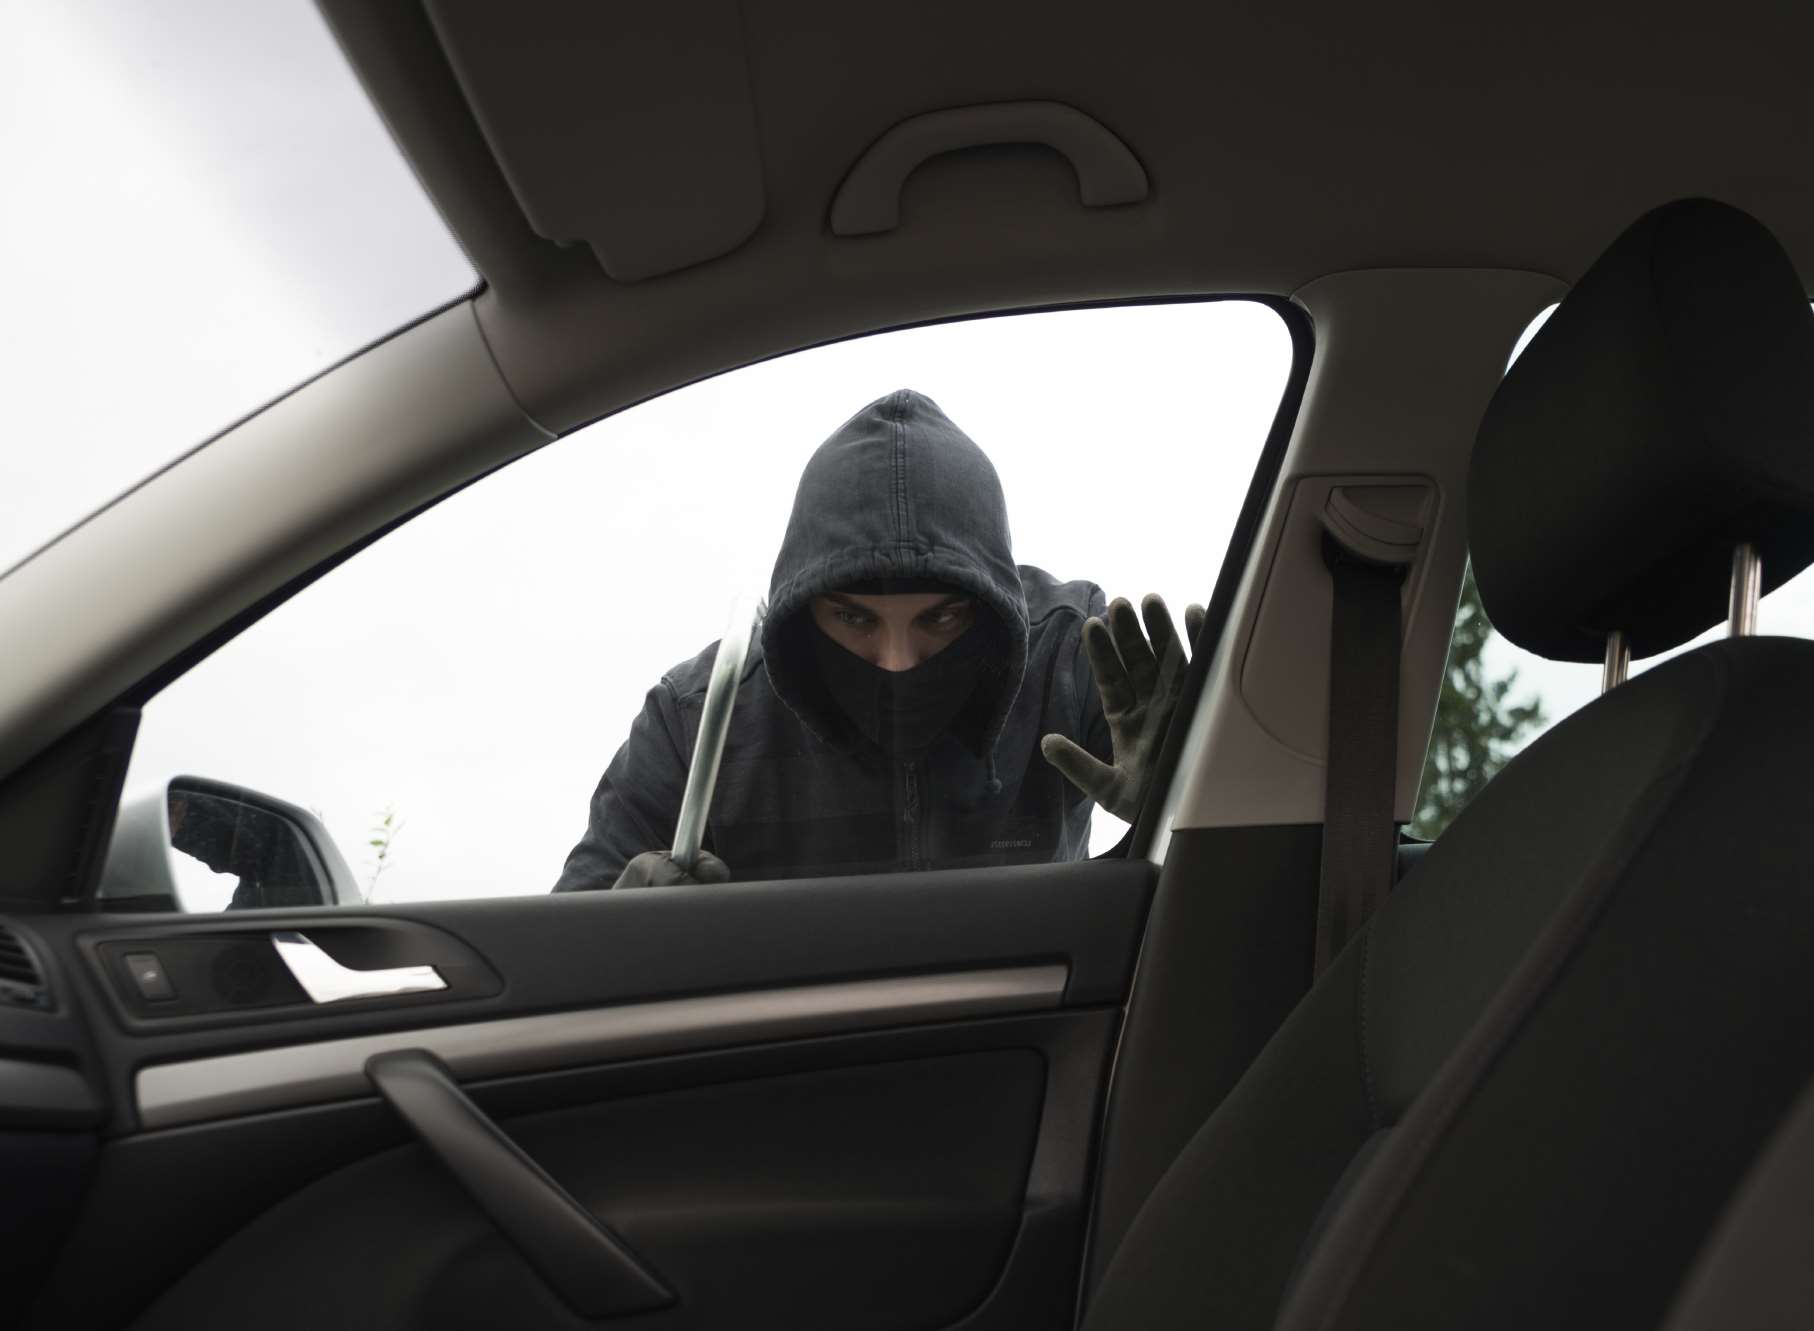 A car thief. Stock image.